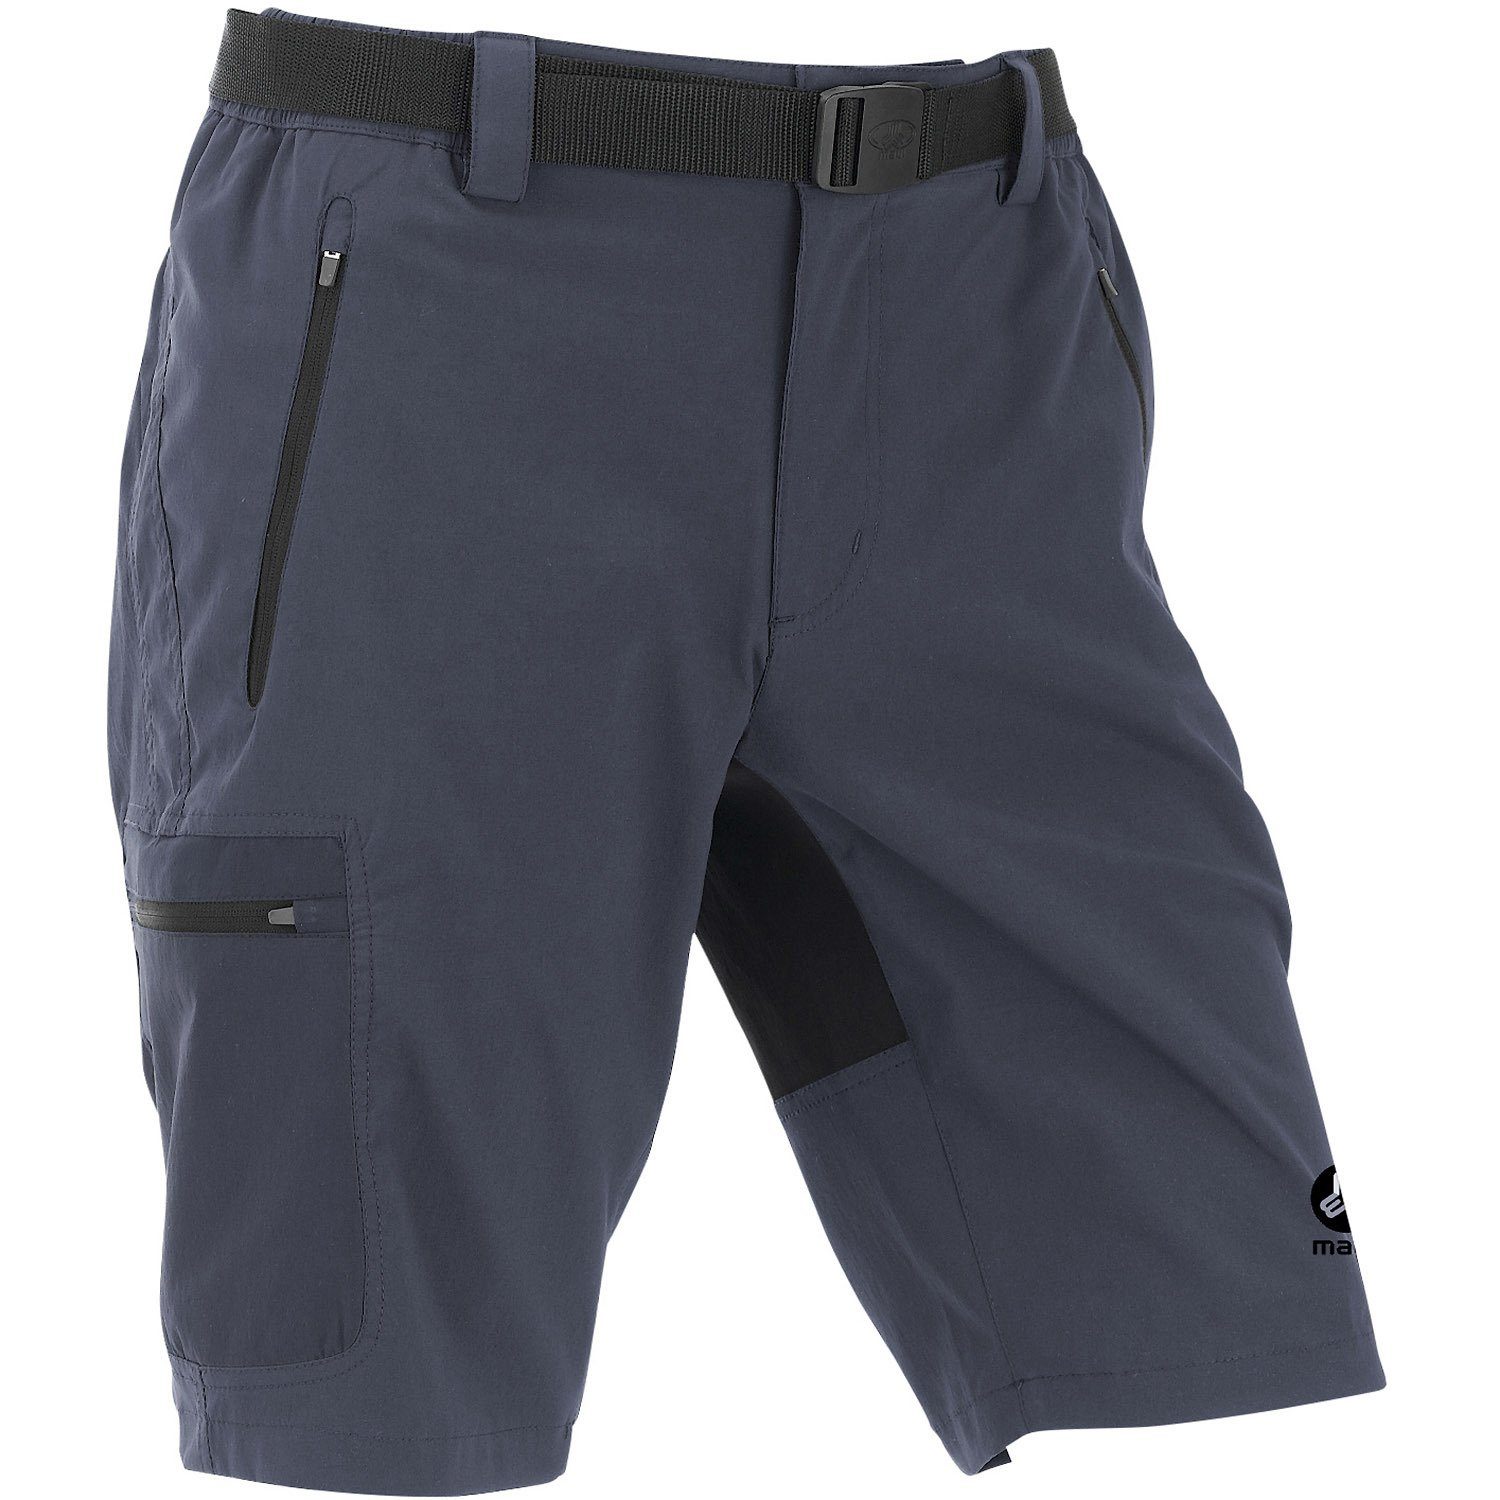 Maul Sport® Funktionsshorts Shorts Bermuda Azurblau II elastic Doldenhorn